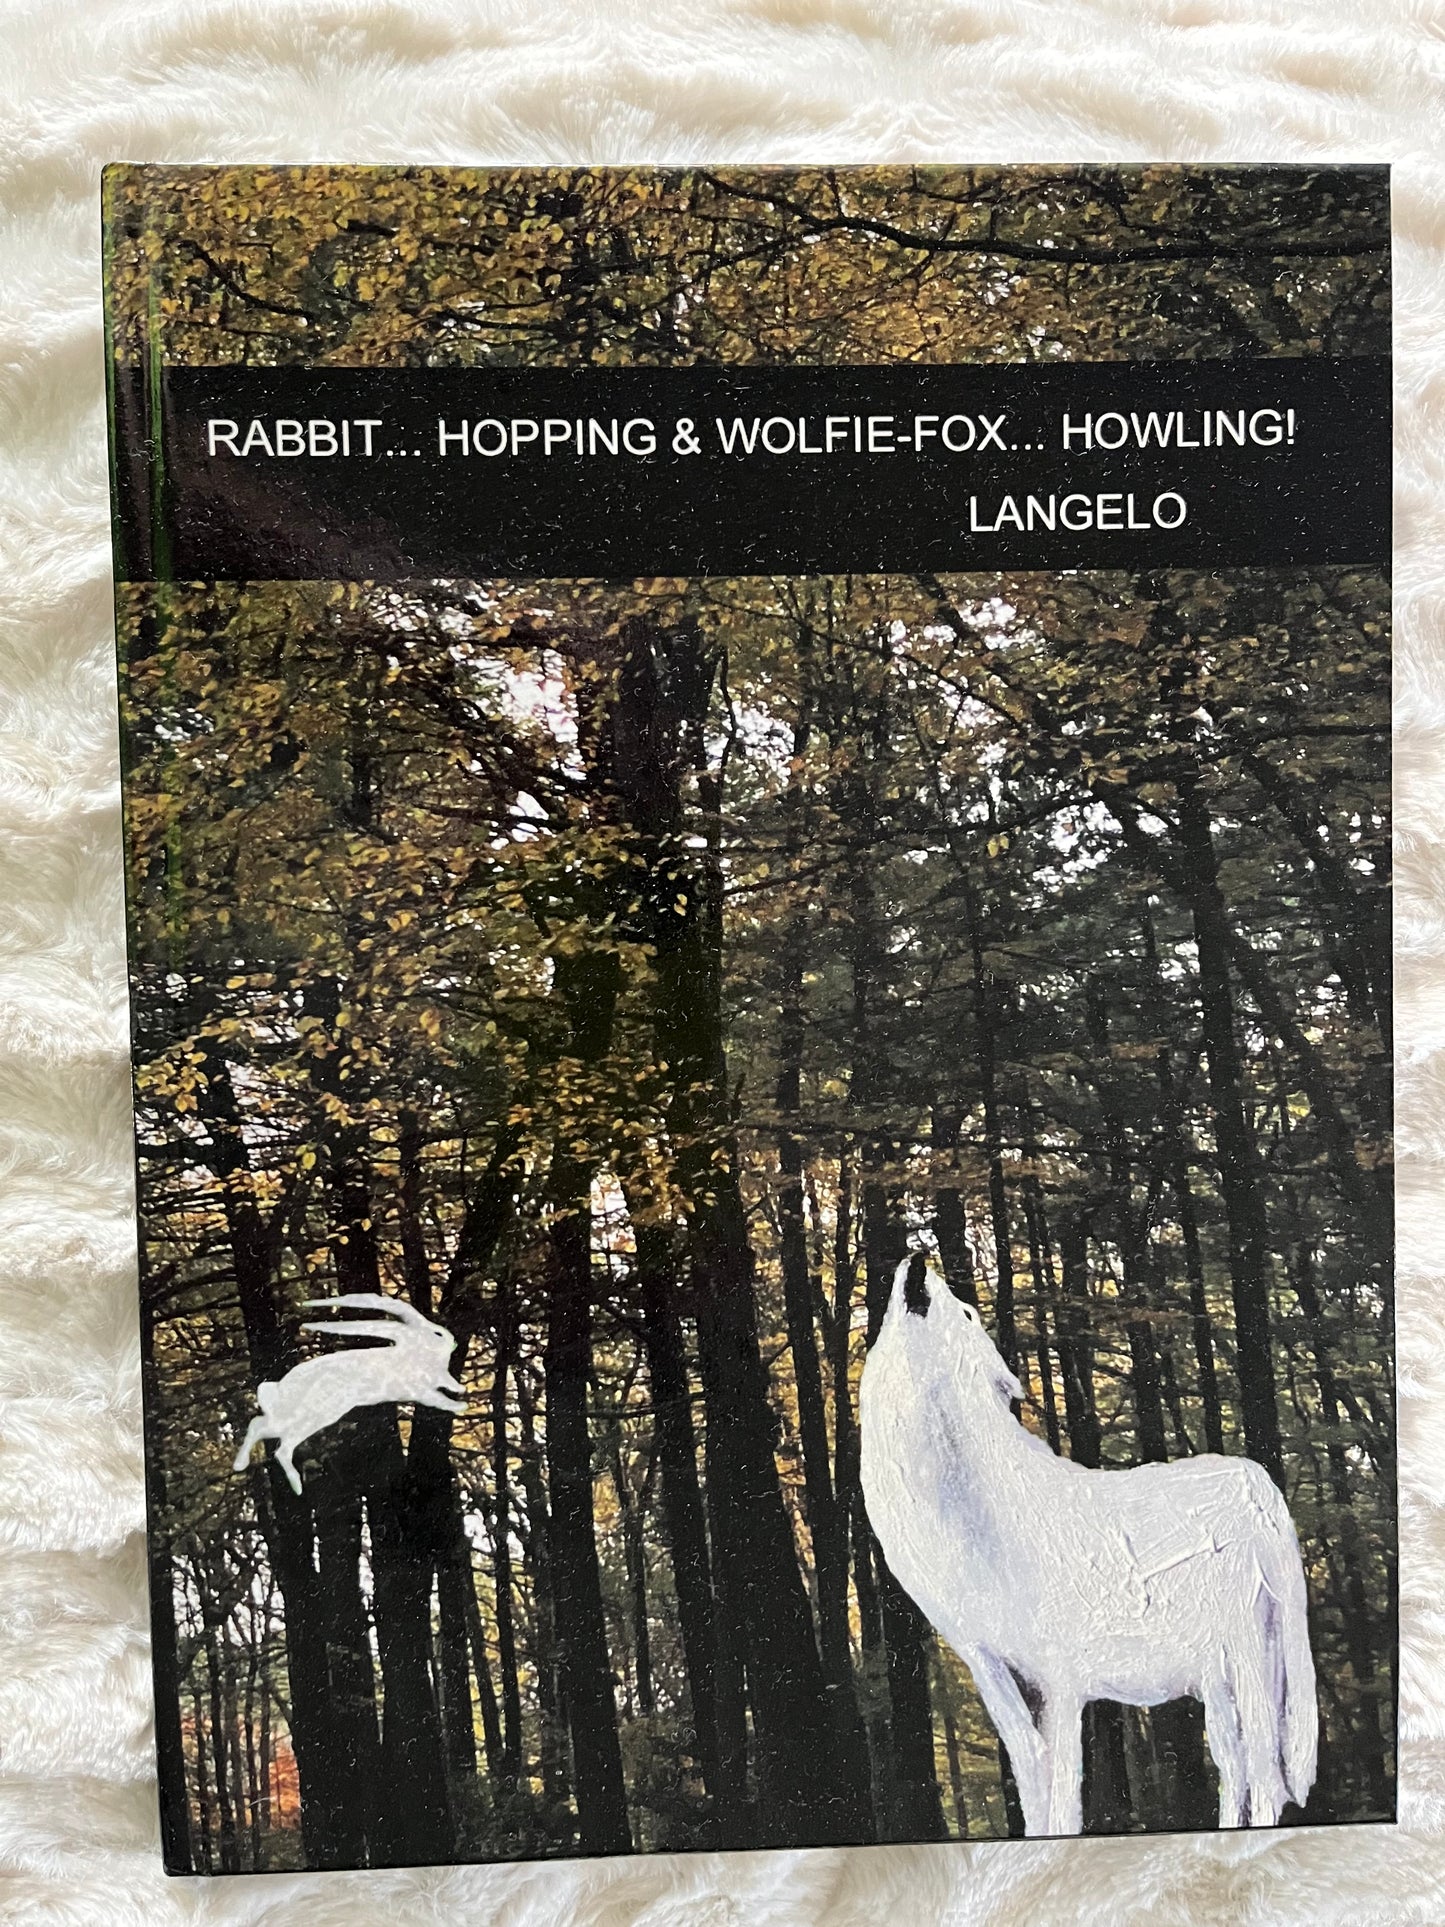 Hardcover Children's Book (Rabbit... Hopping & Wolfie-Fox... Howling! by Langelo)